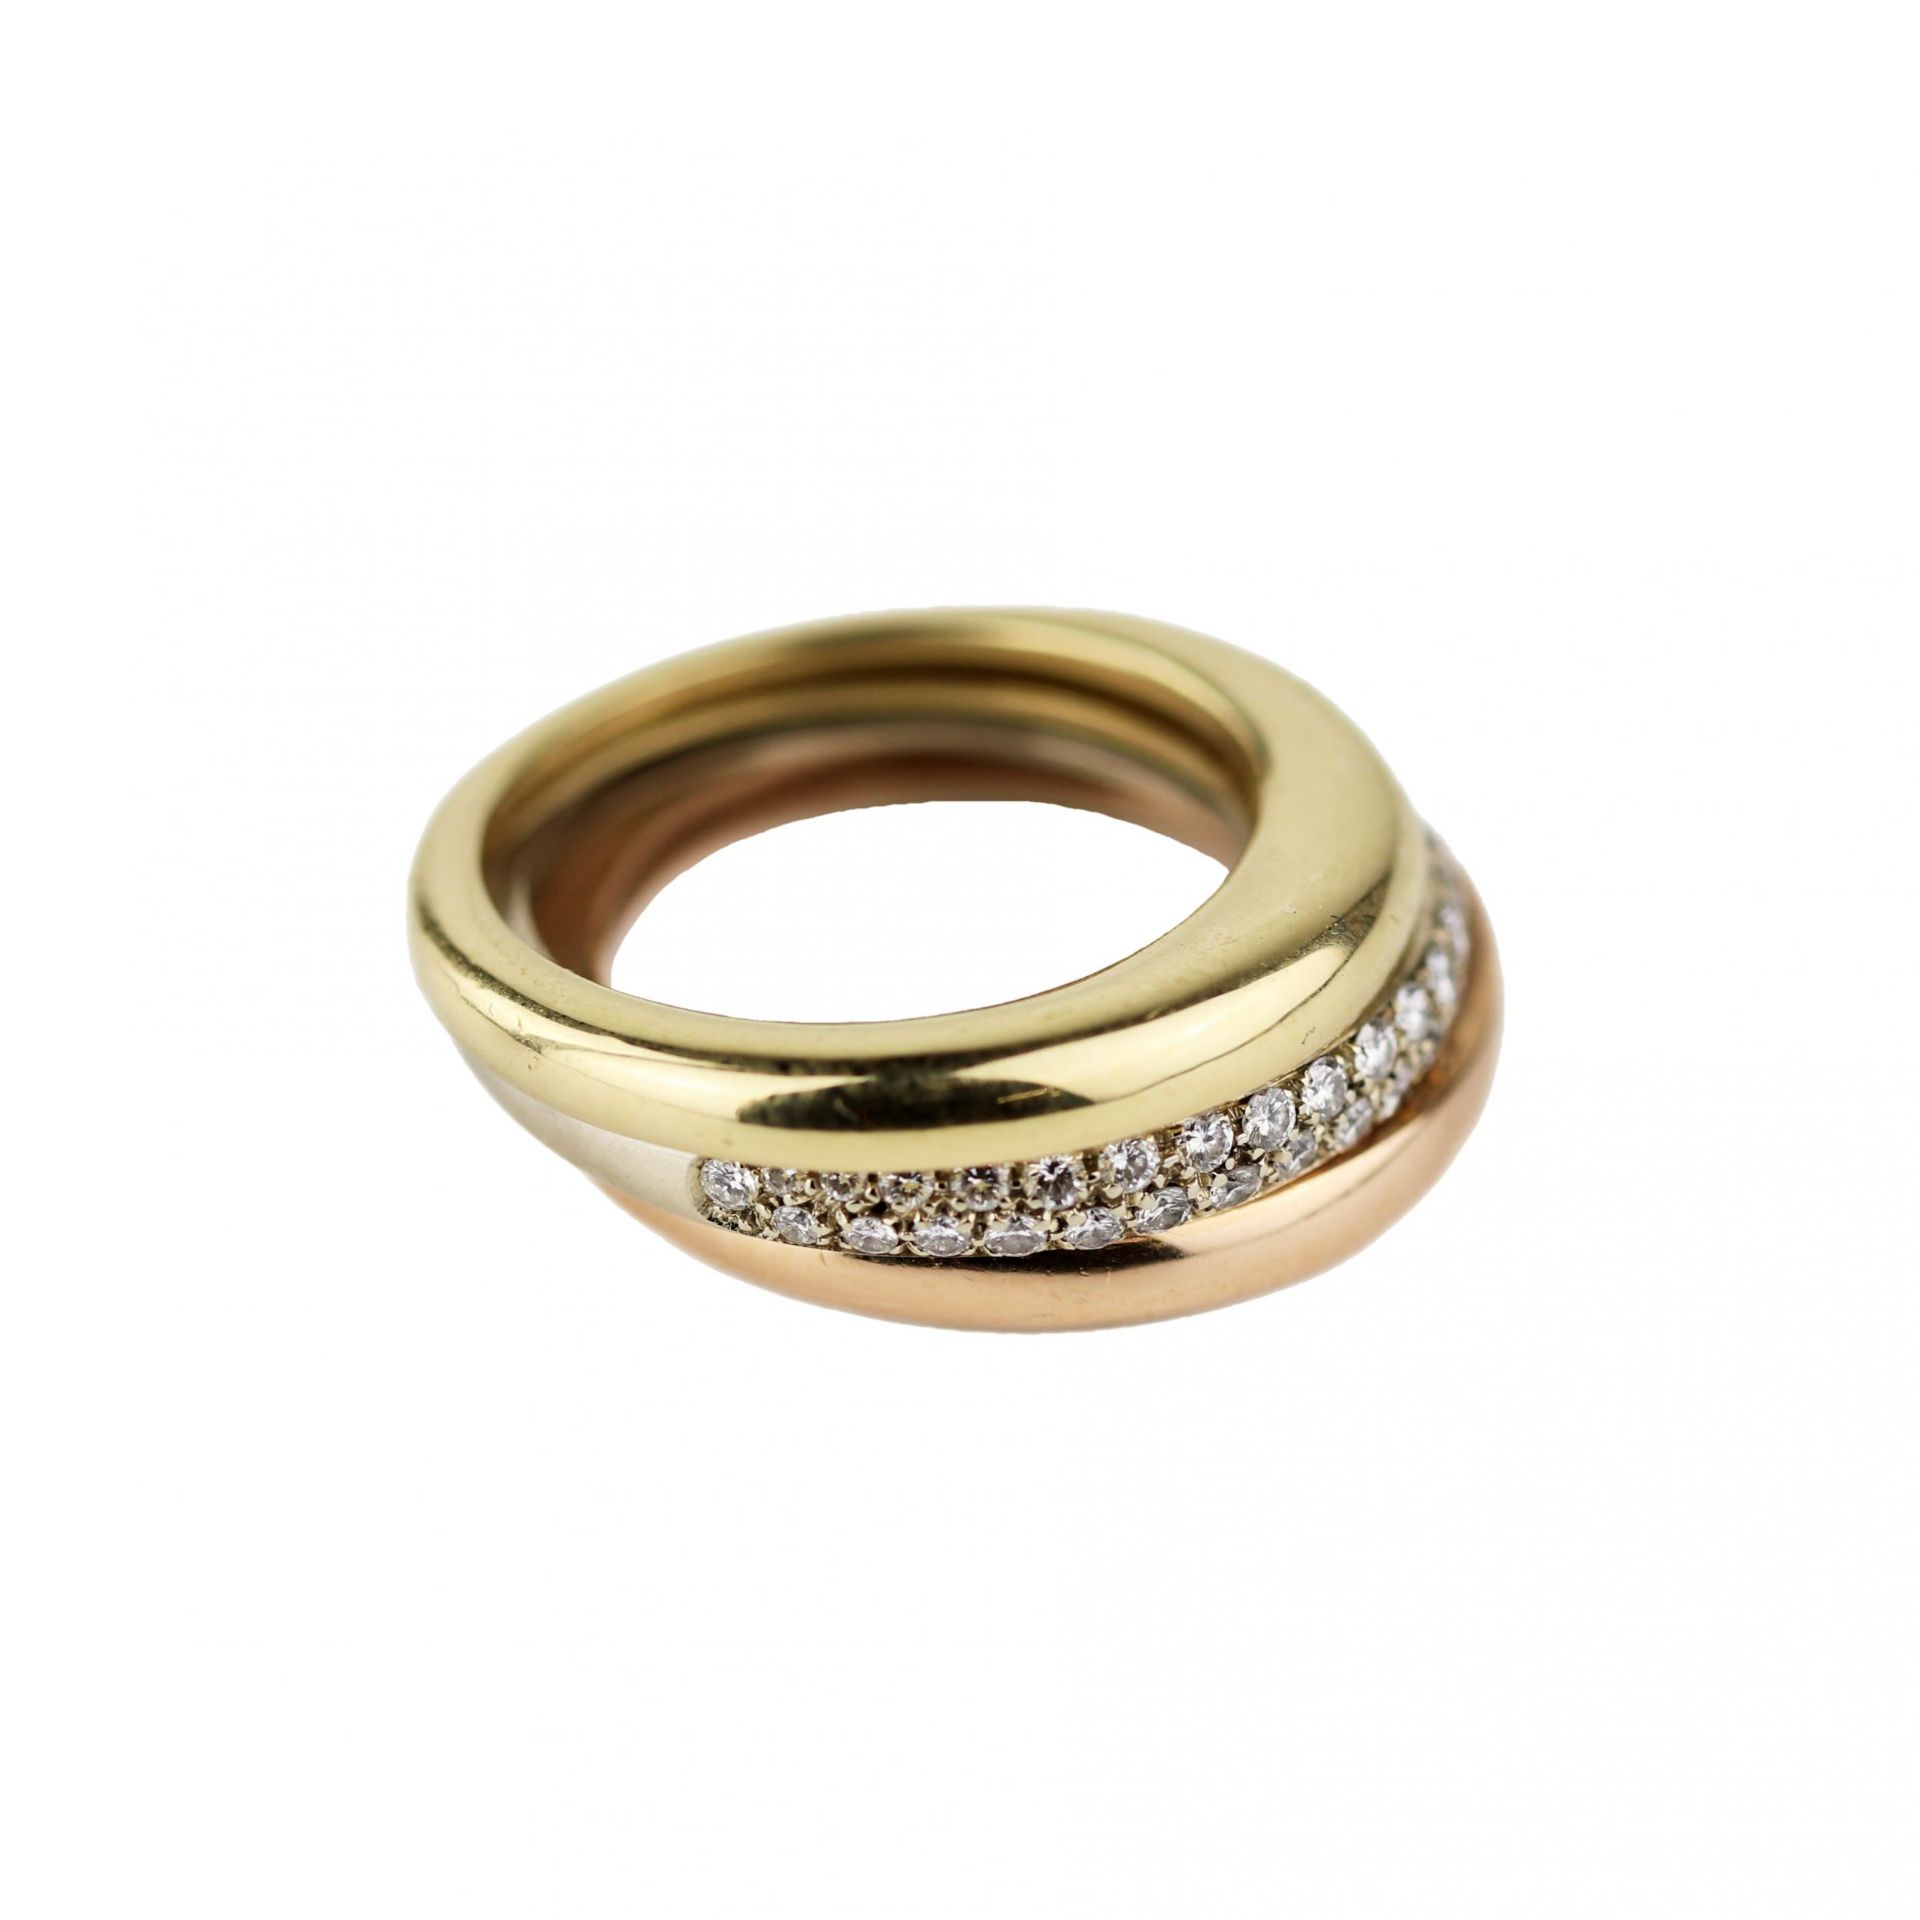 Cartier Mobilis tricolor 0.750 diamond ring in the original case. - Image 5 of 8